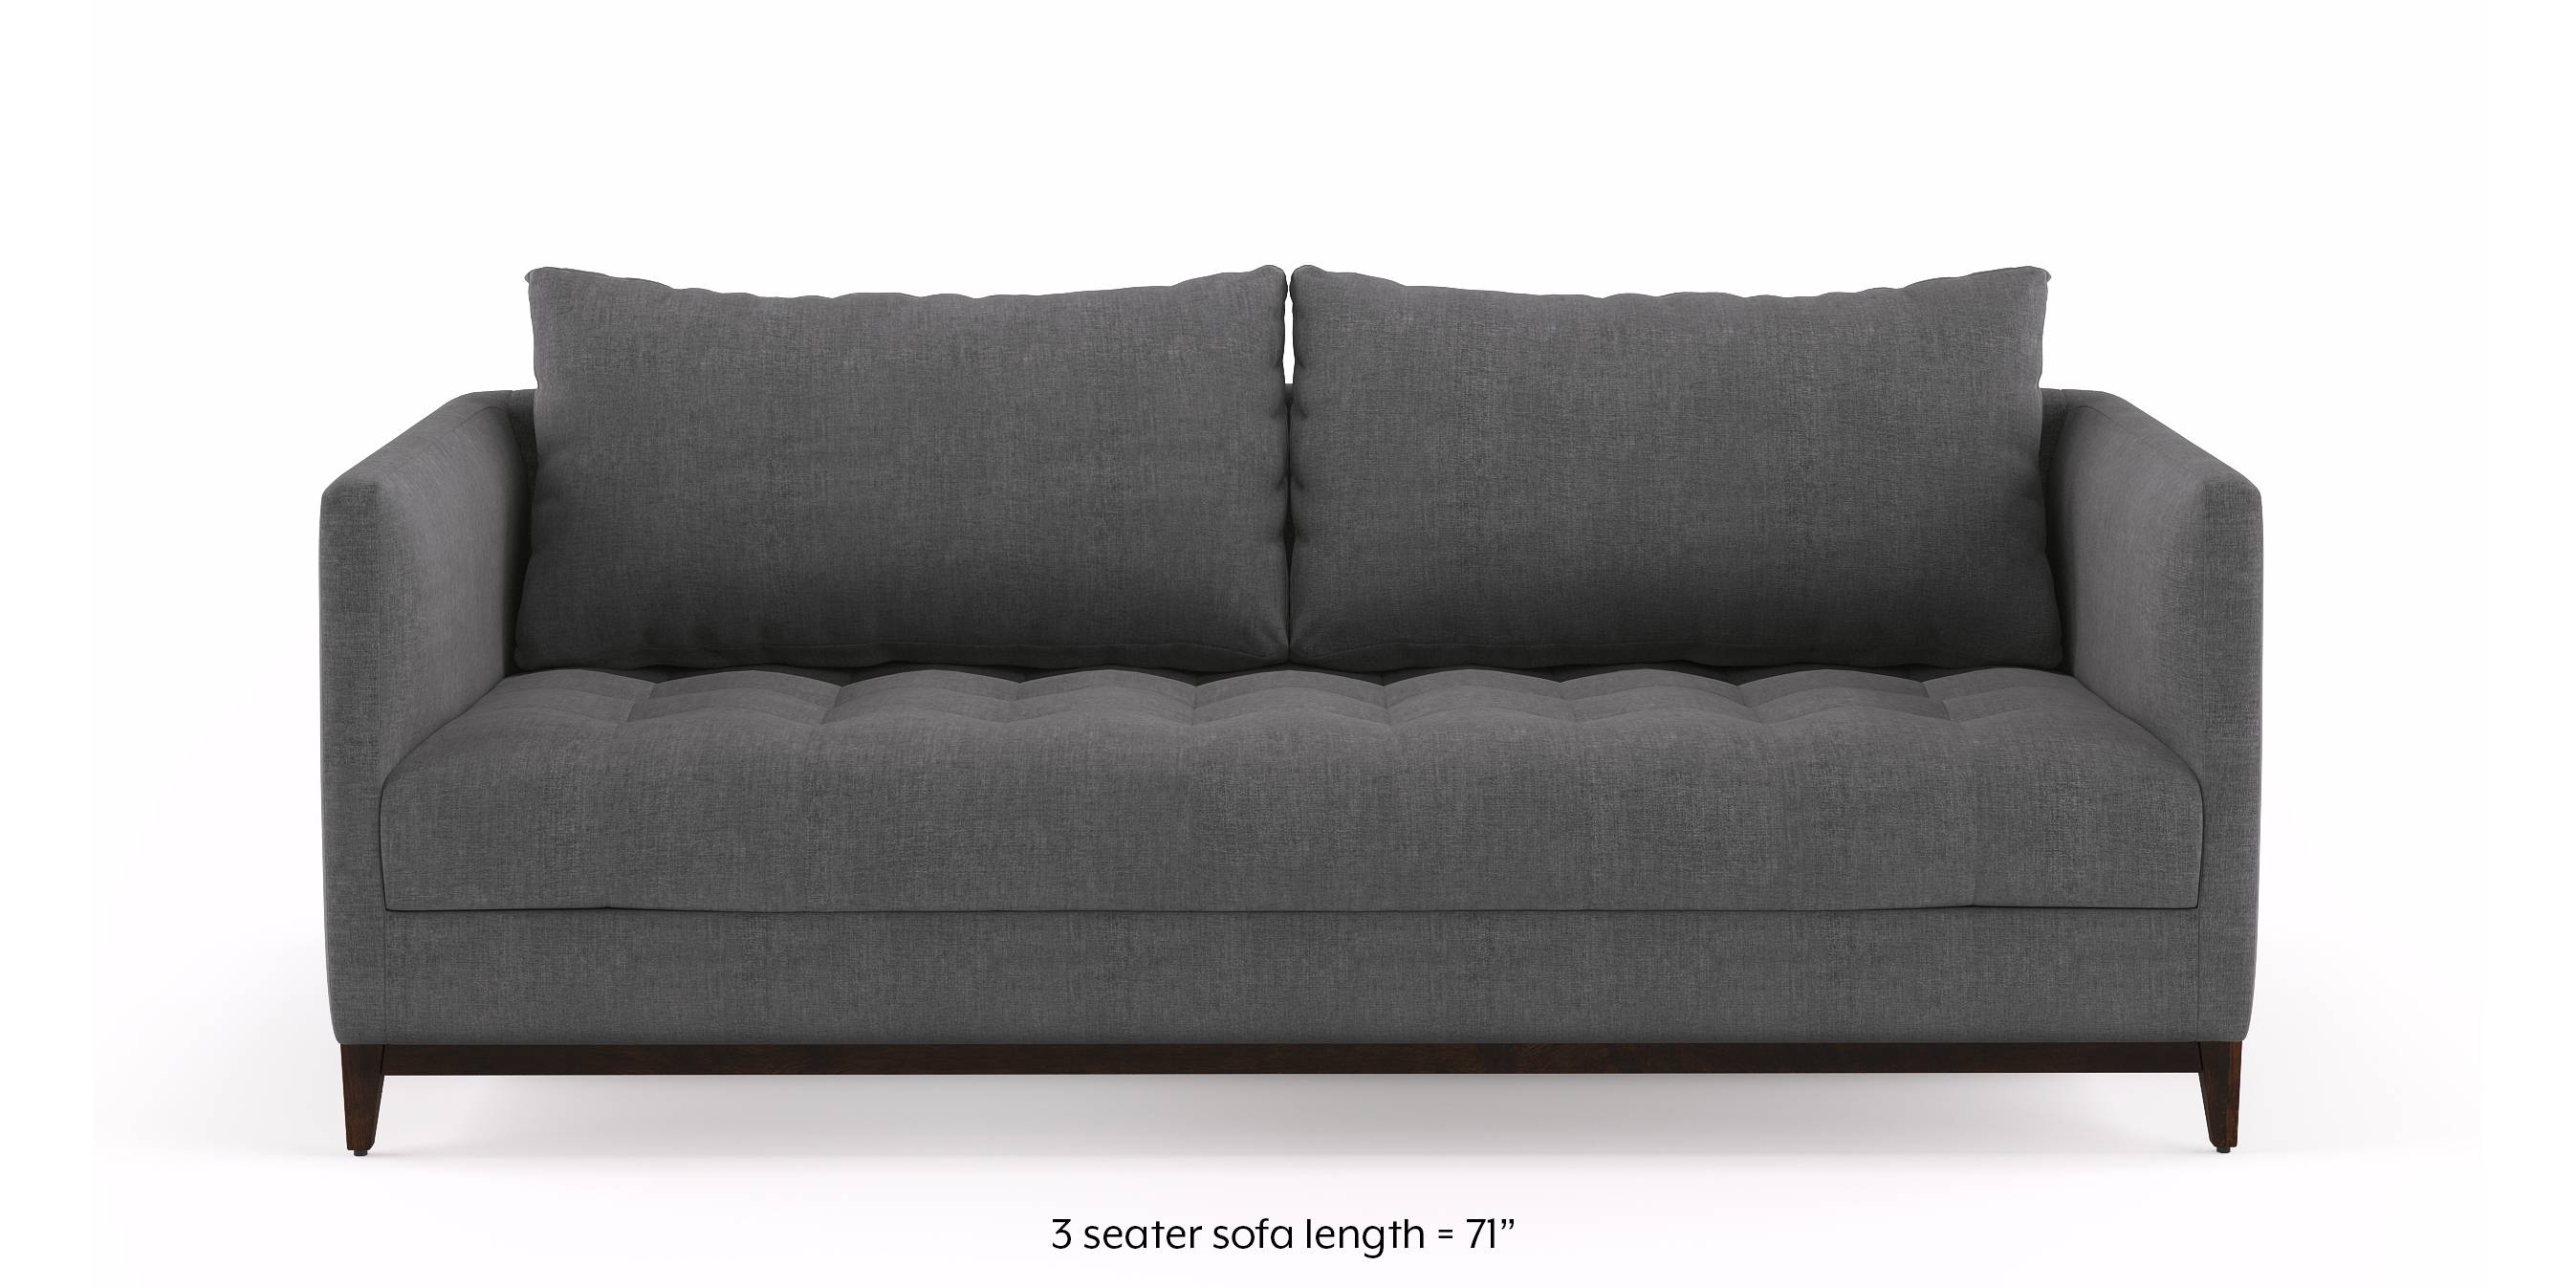 Florence Compact Sofa (Smoke Grey) (3-seater Custom Set - Sofas, None Standard Set - Sofas, Smoke, Fabric Sofa Material, Regular Sofa Size, Regular Sofa Type) by Urban Ladder - - 169100